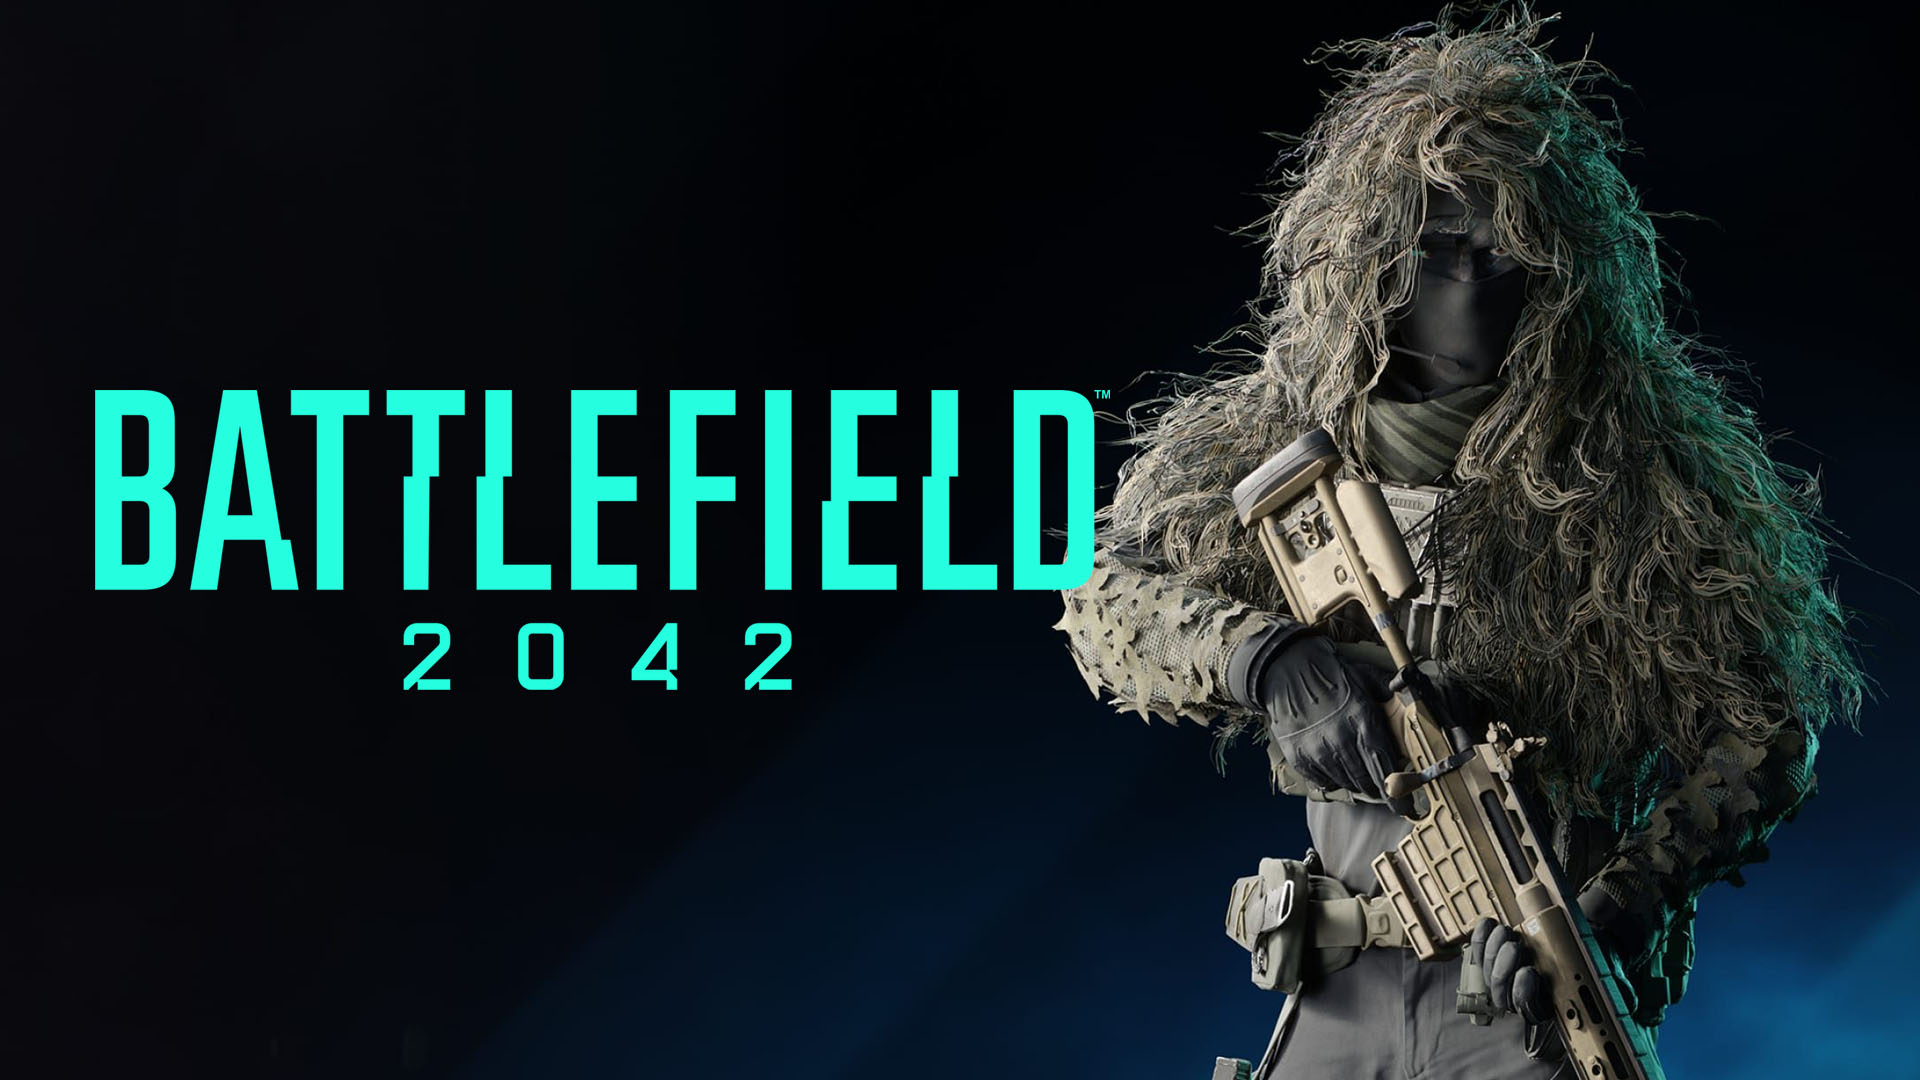 Battlefield 2042 Open Beta